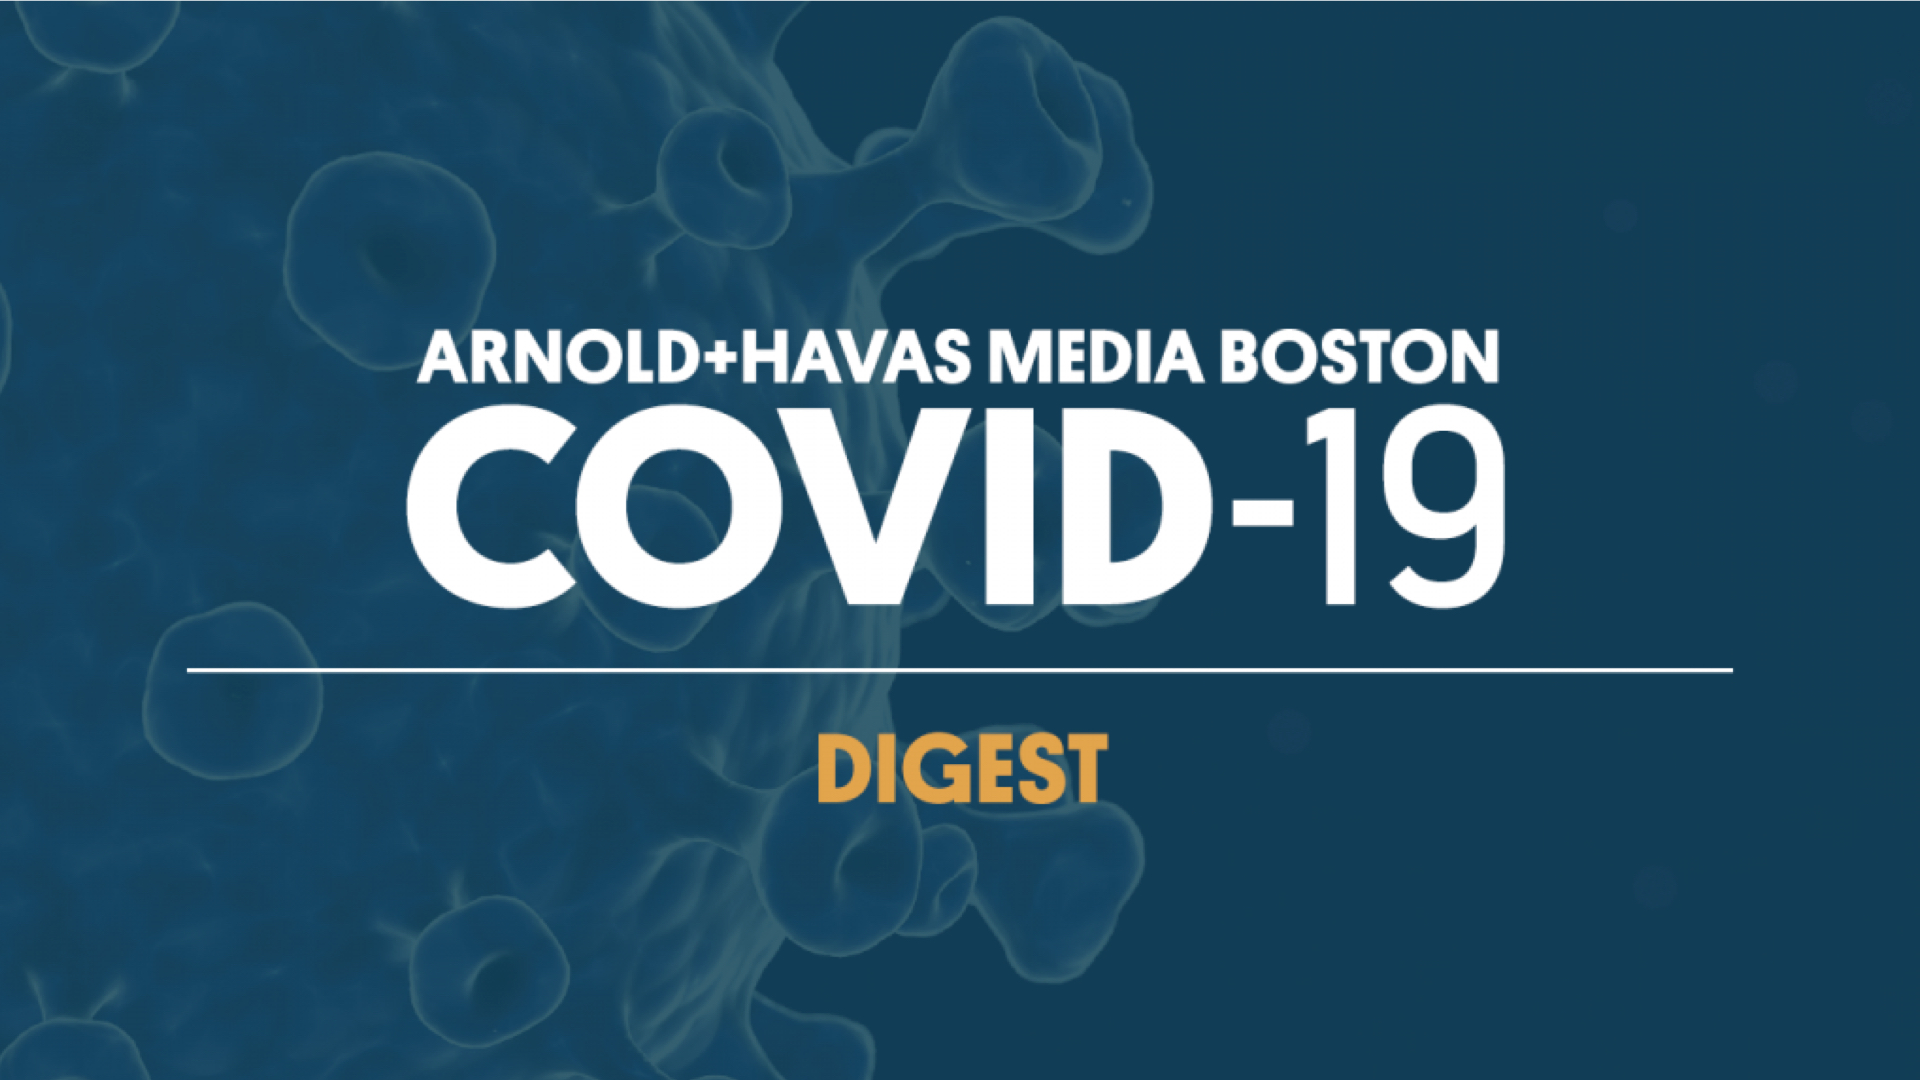  Arnold + Havas Media Boston COVID-19 Digest February 17, 2020.